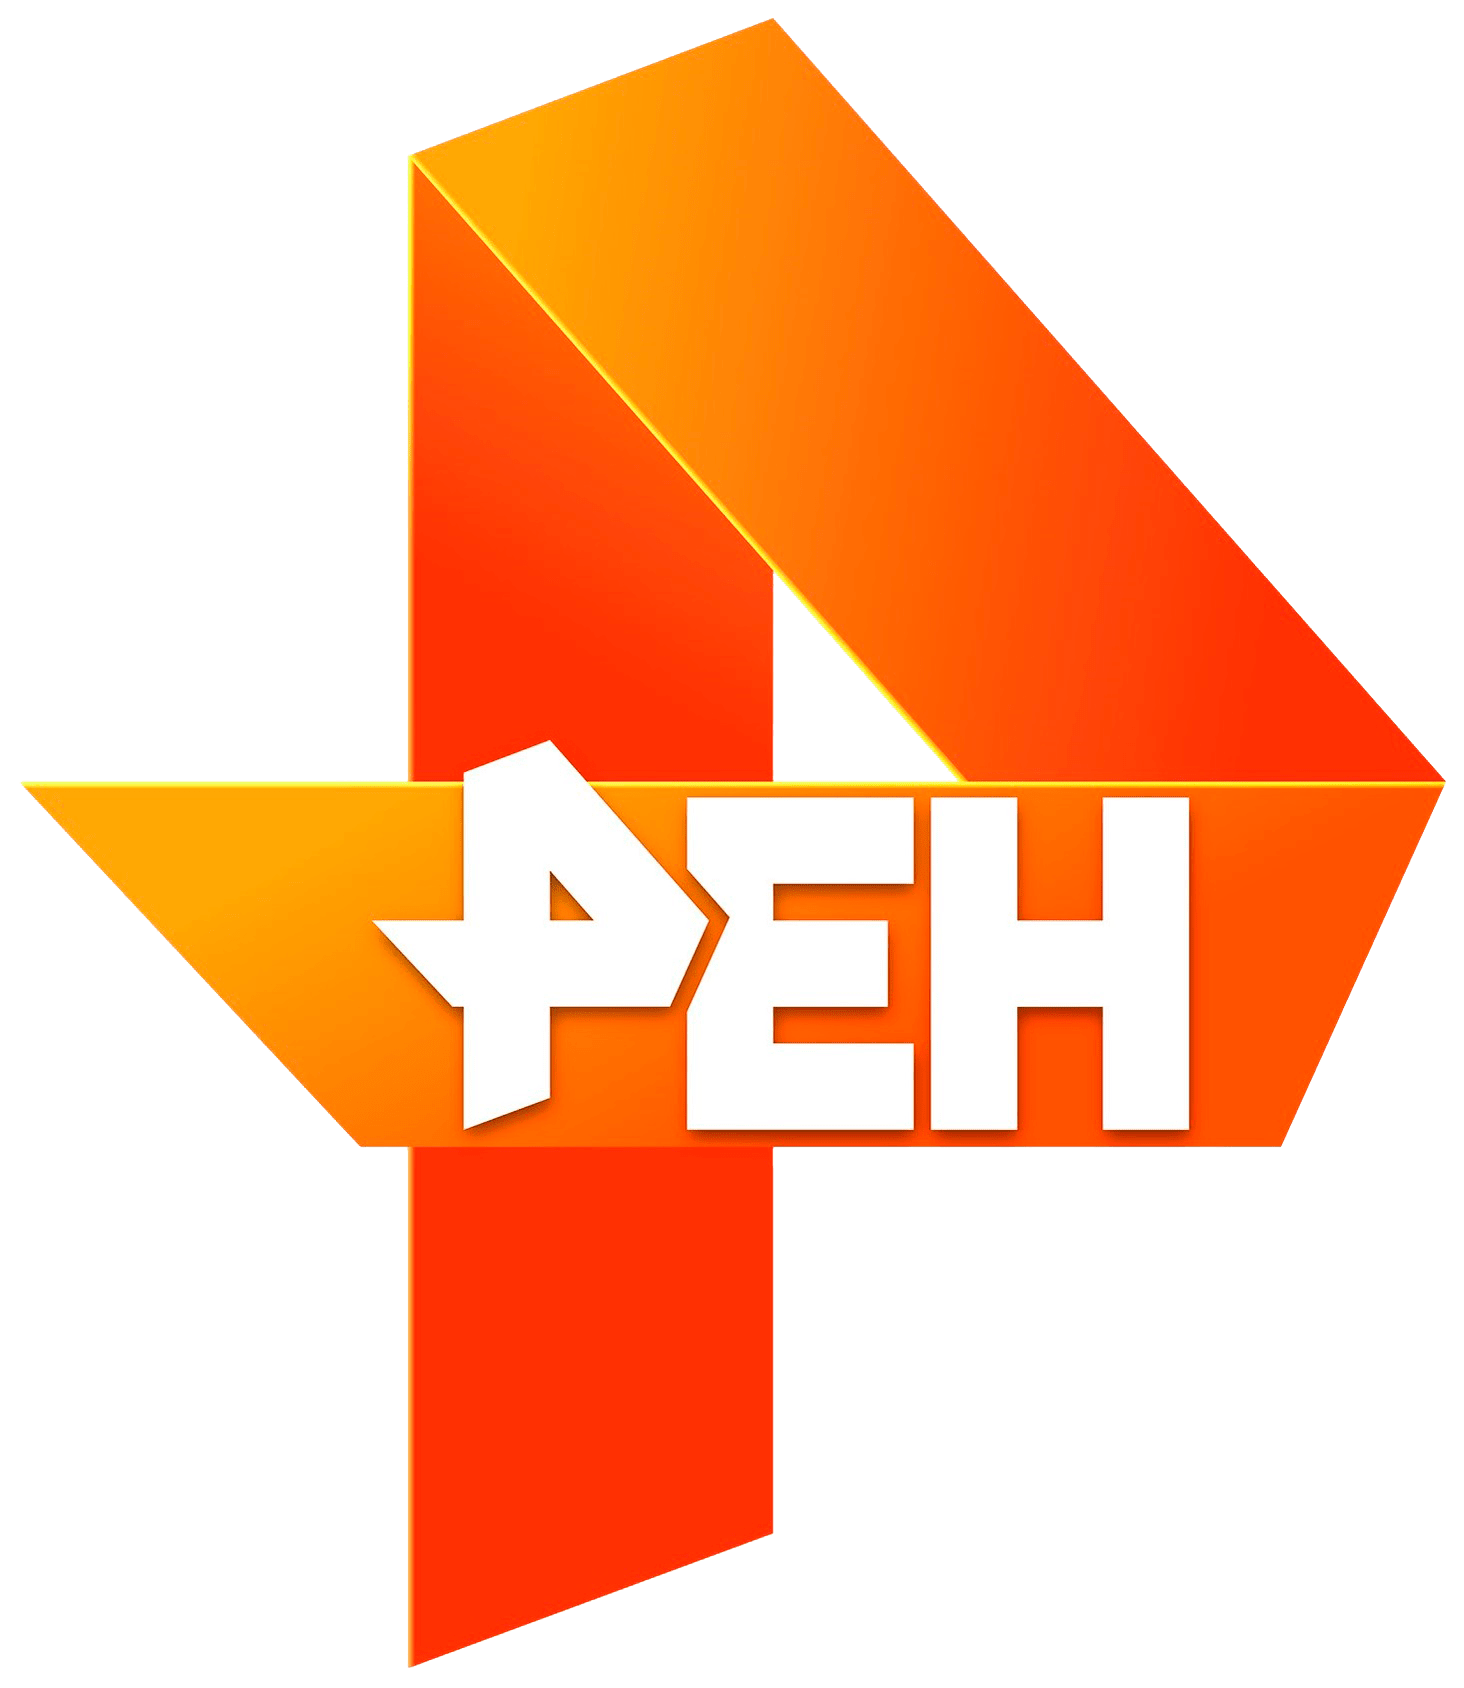 Раземщение рекламы РЕН ТВ, г.Астрахань